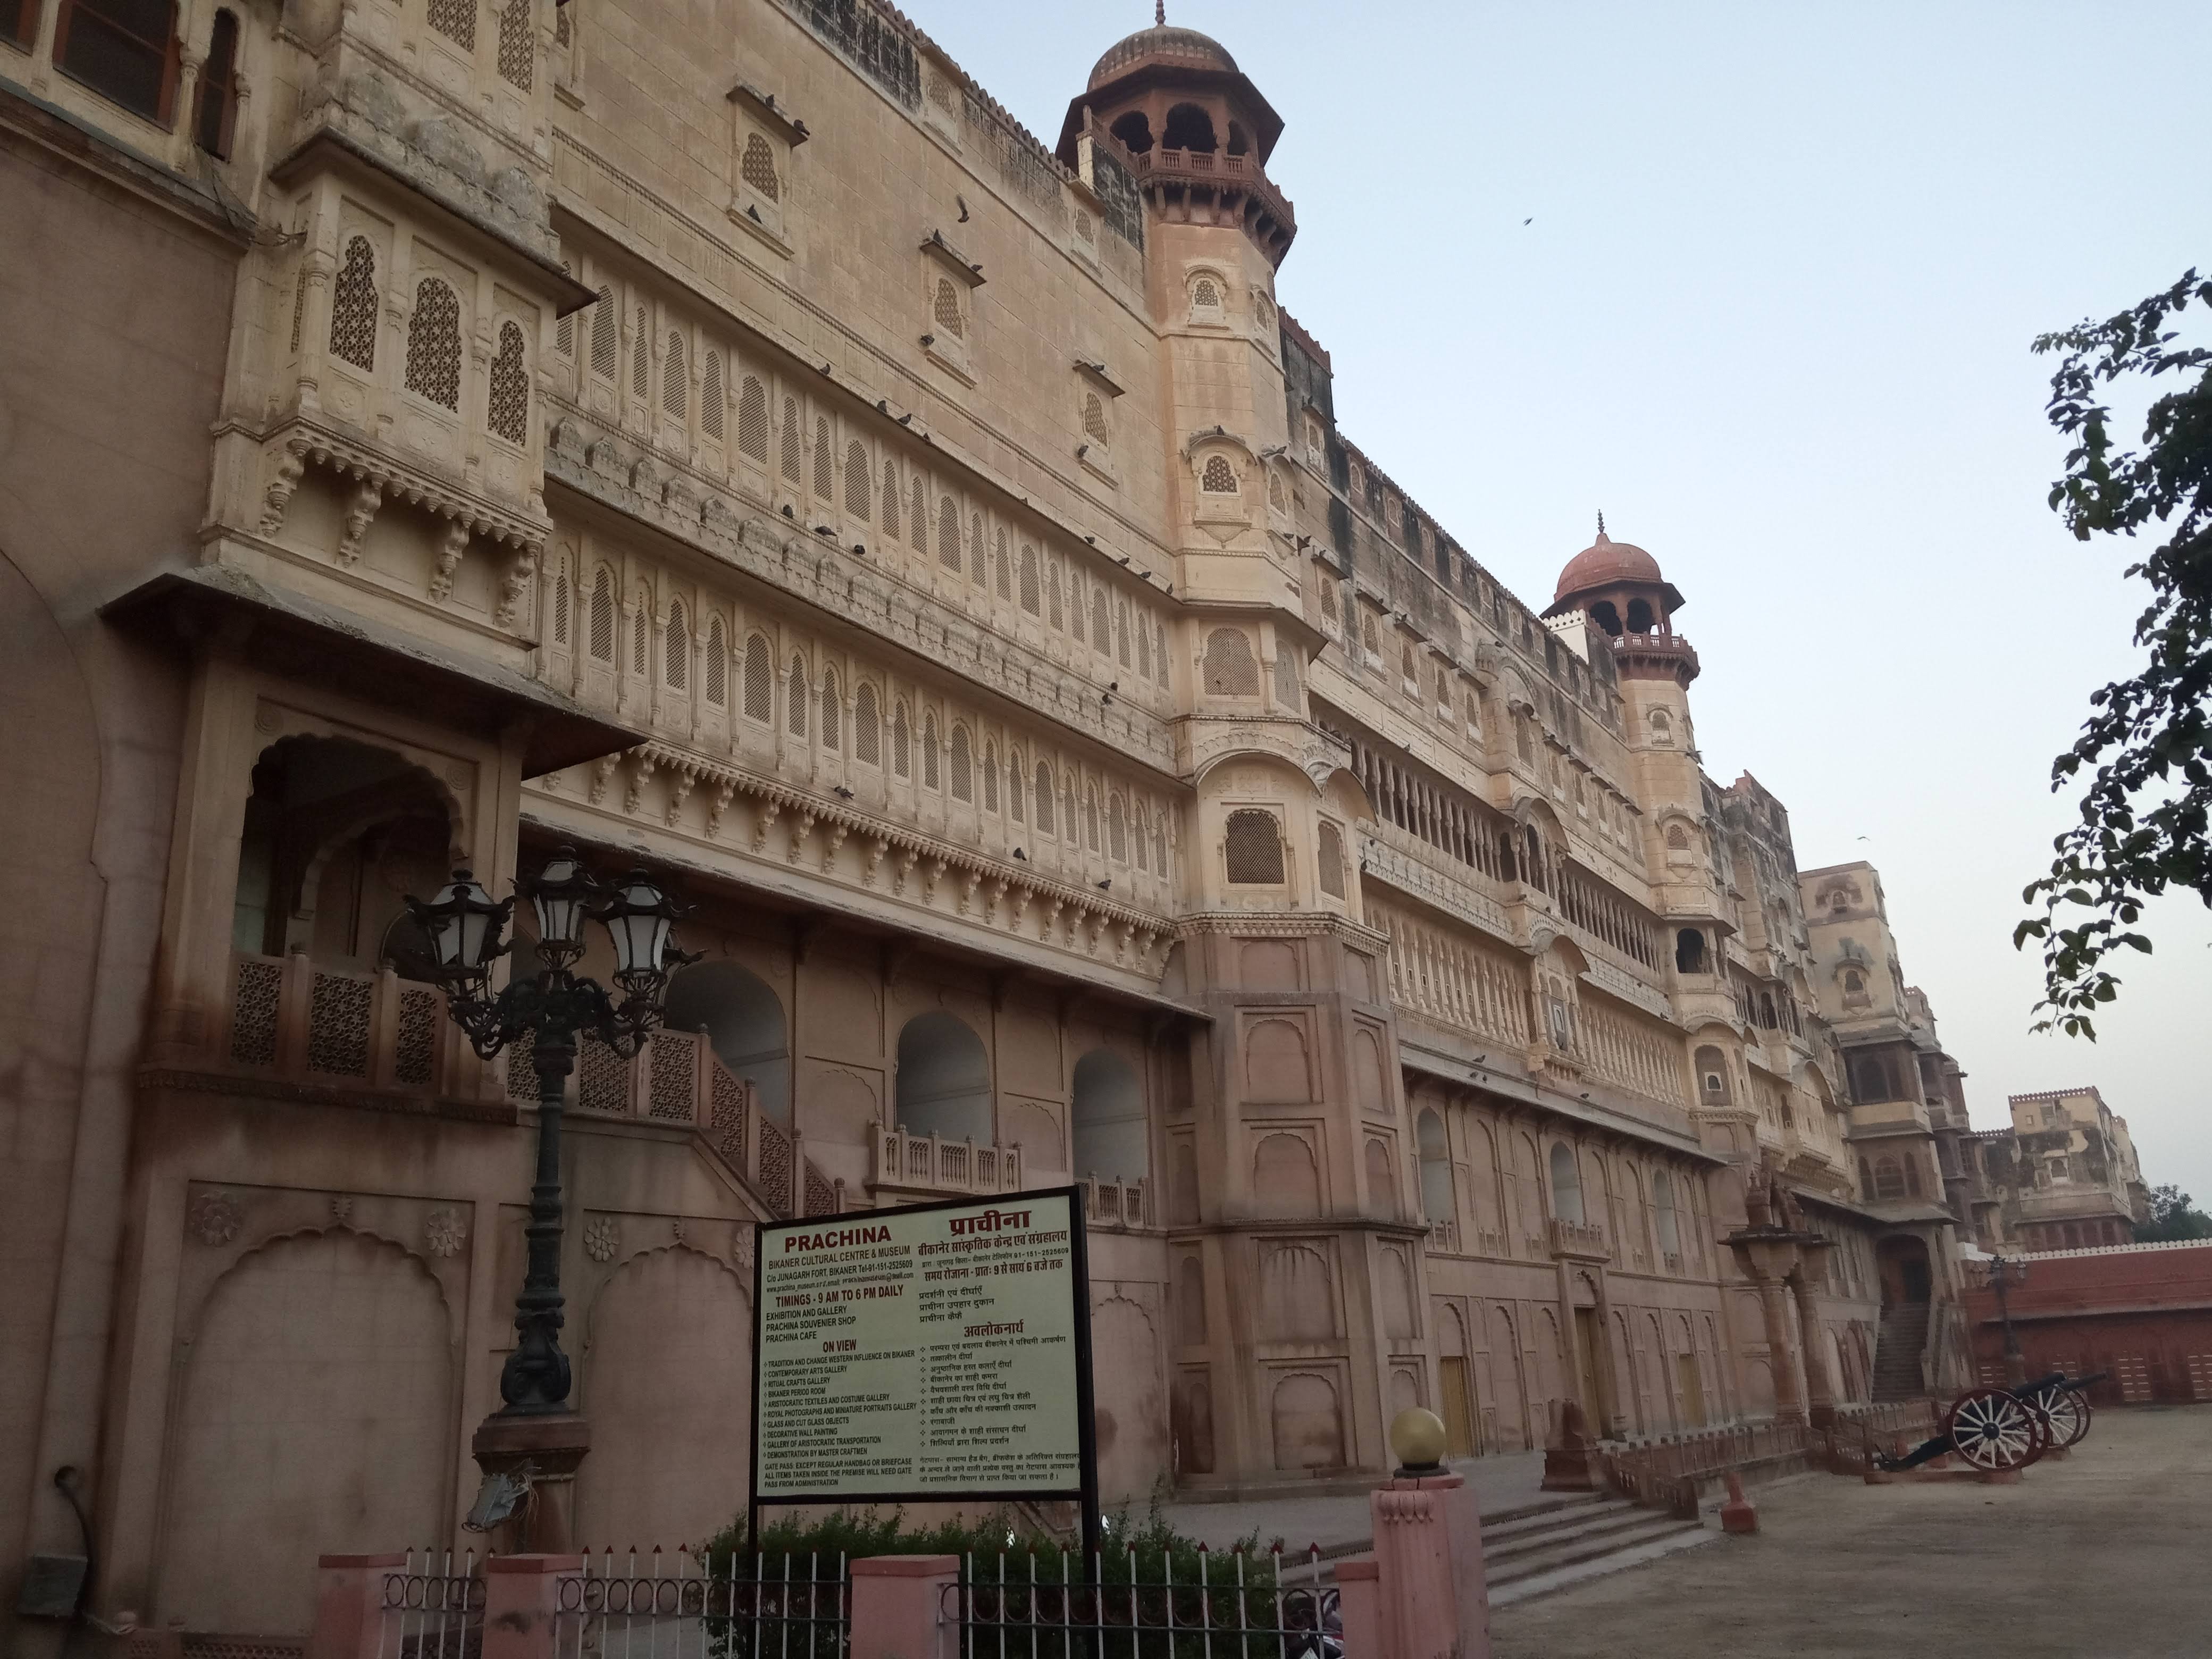 Bikaner Fort in Rajasthan